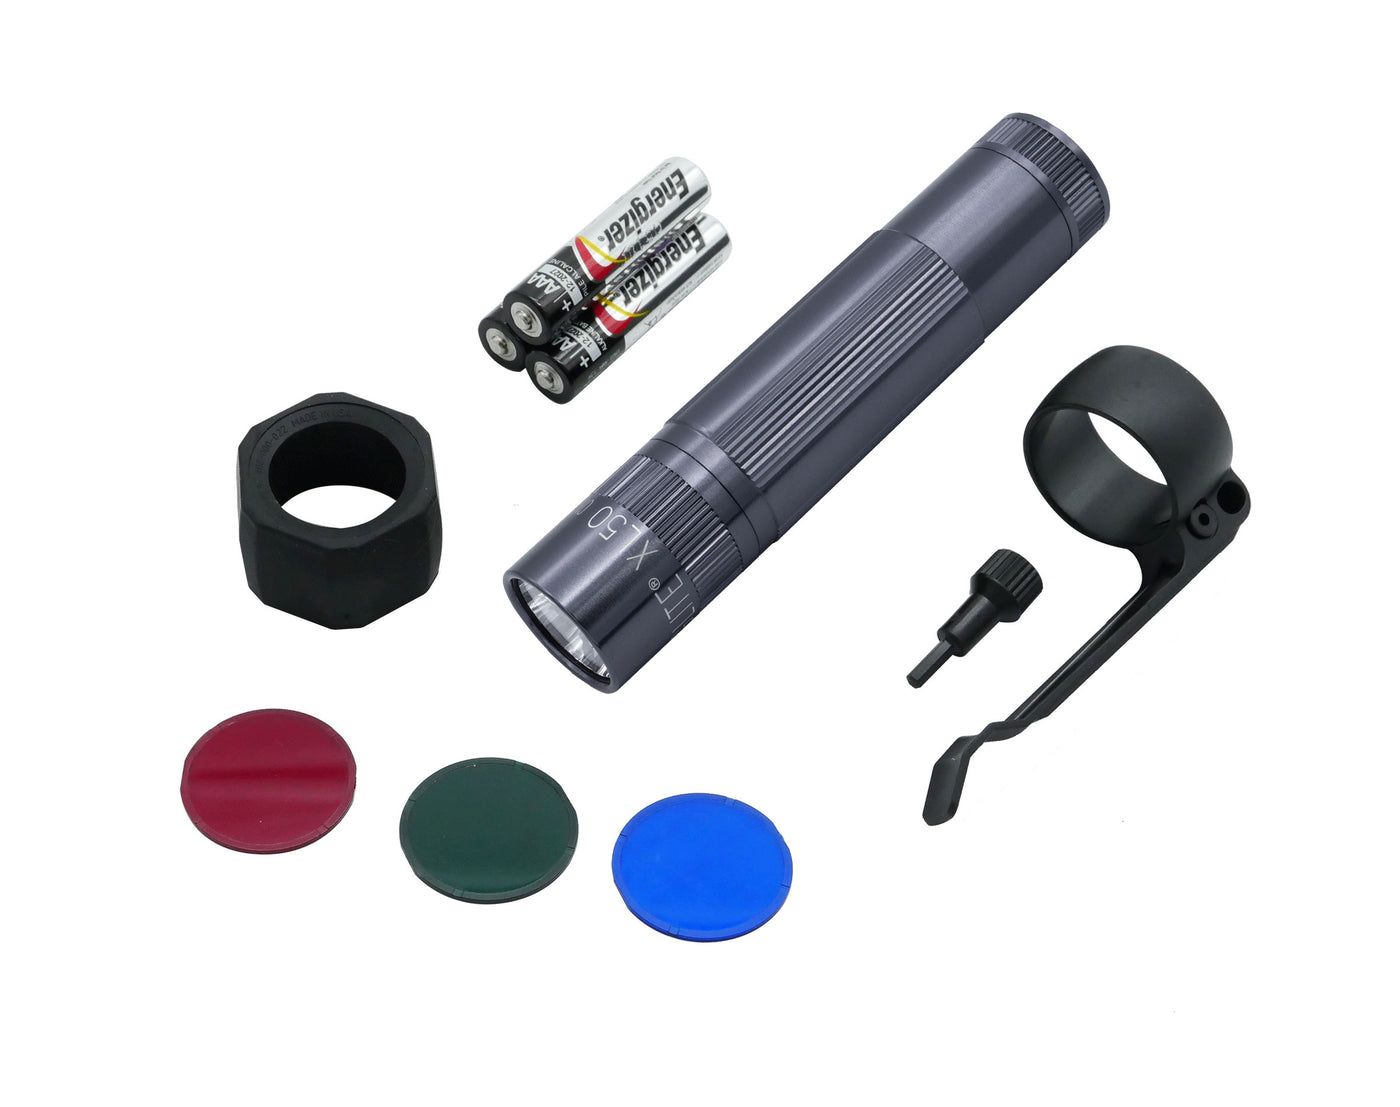 Maglite XL50 LED Pocket Flashlight withIncludes Anti Roll / Lens holder, Colored Lens set, Red, Green, & Blue, Pocket Clip, and Pocket Clip Tool. (3) Premium Alkaline Batteries.